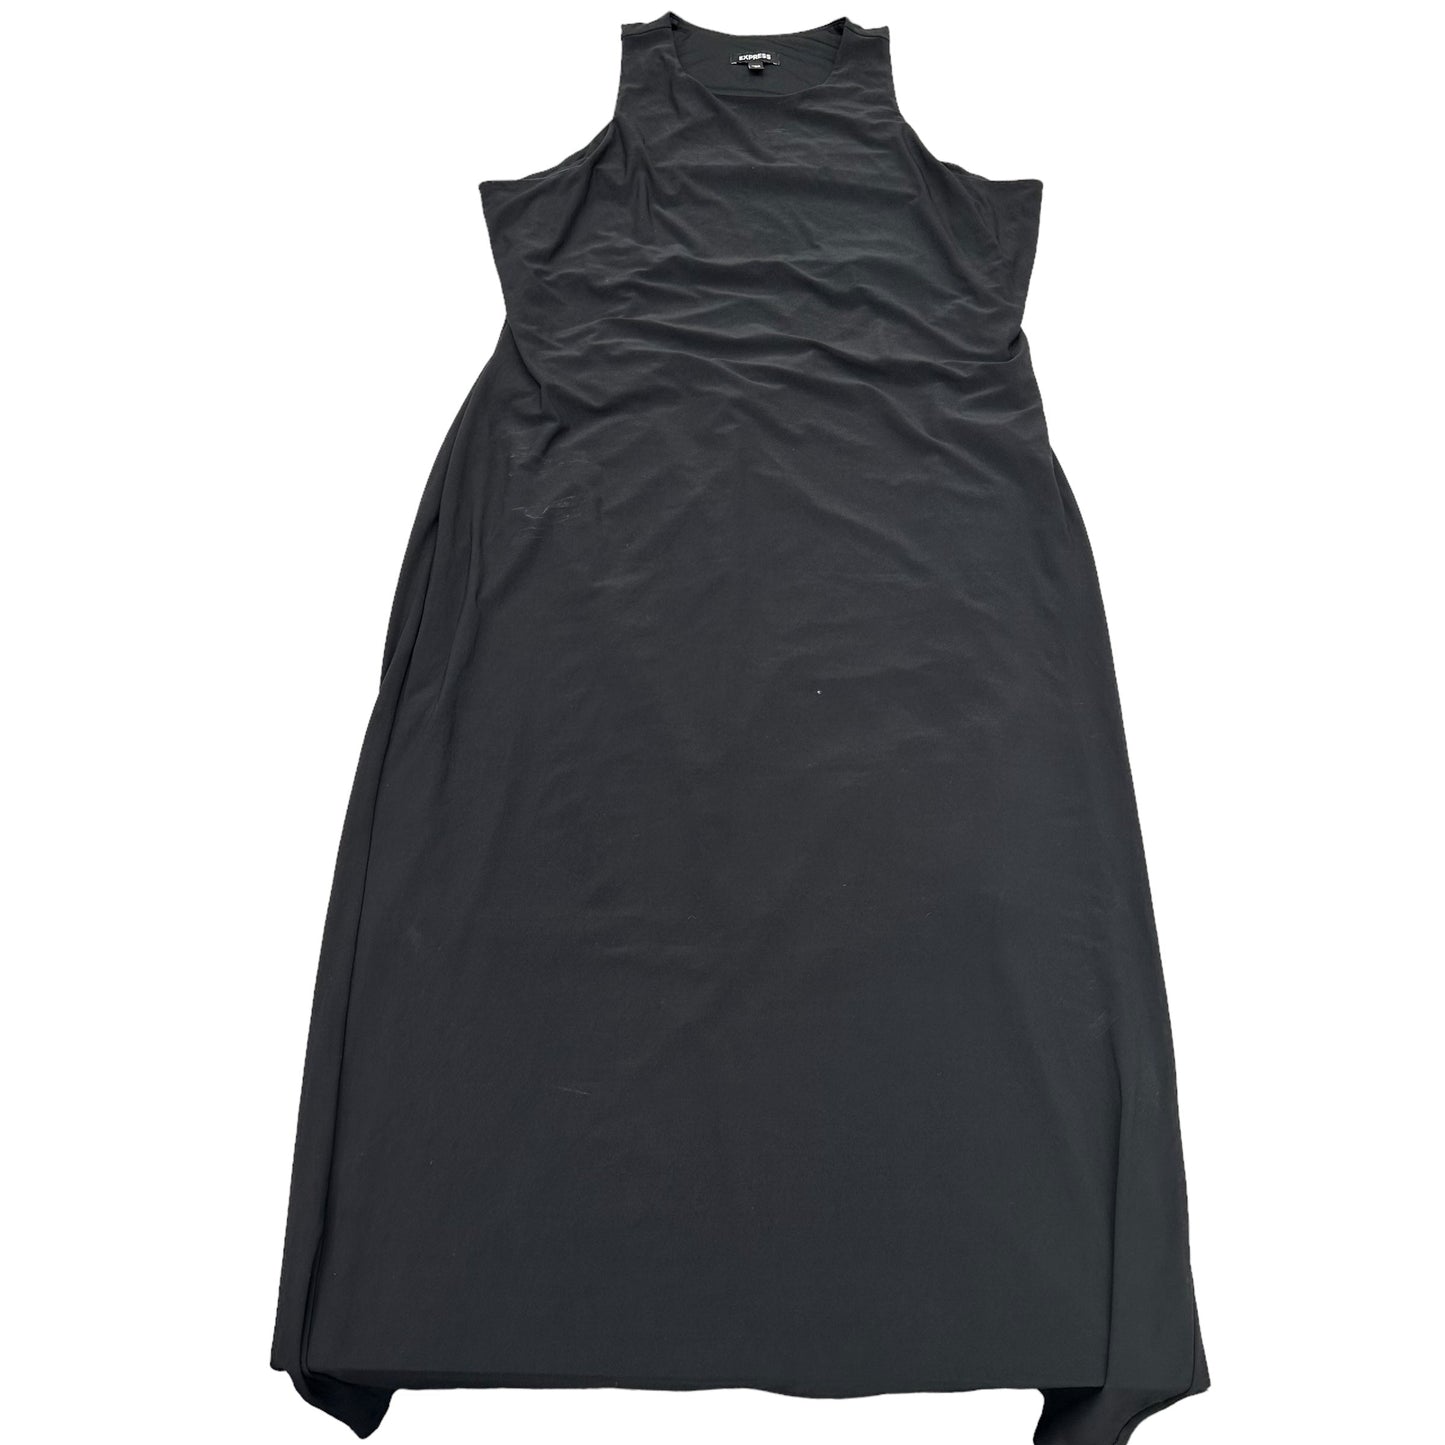 BLACK DRESS CASUAL MAXI by EXPRESS Size:XL